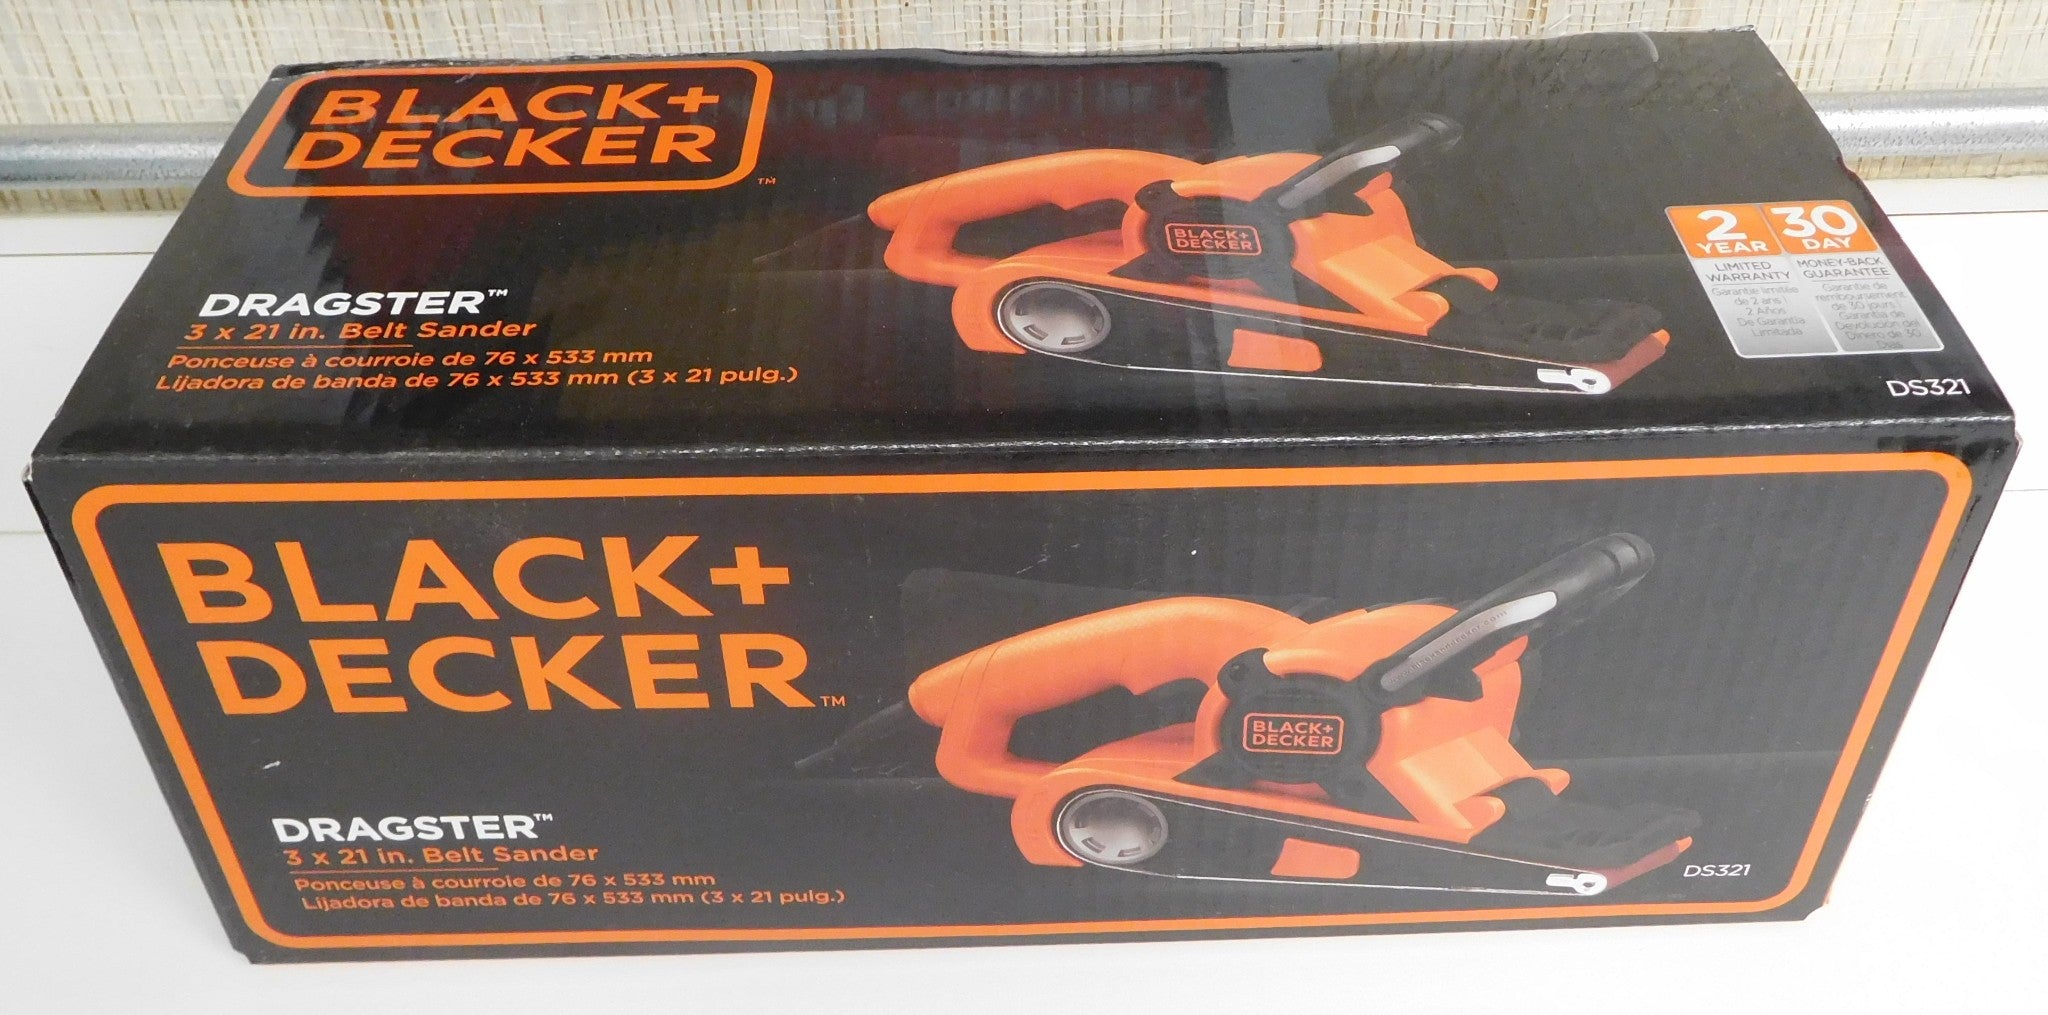 Black & Decker 3 In. x 21 In. Dragster Belt Sander - Power